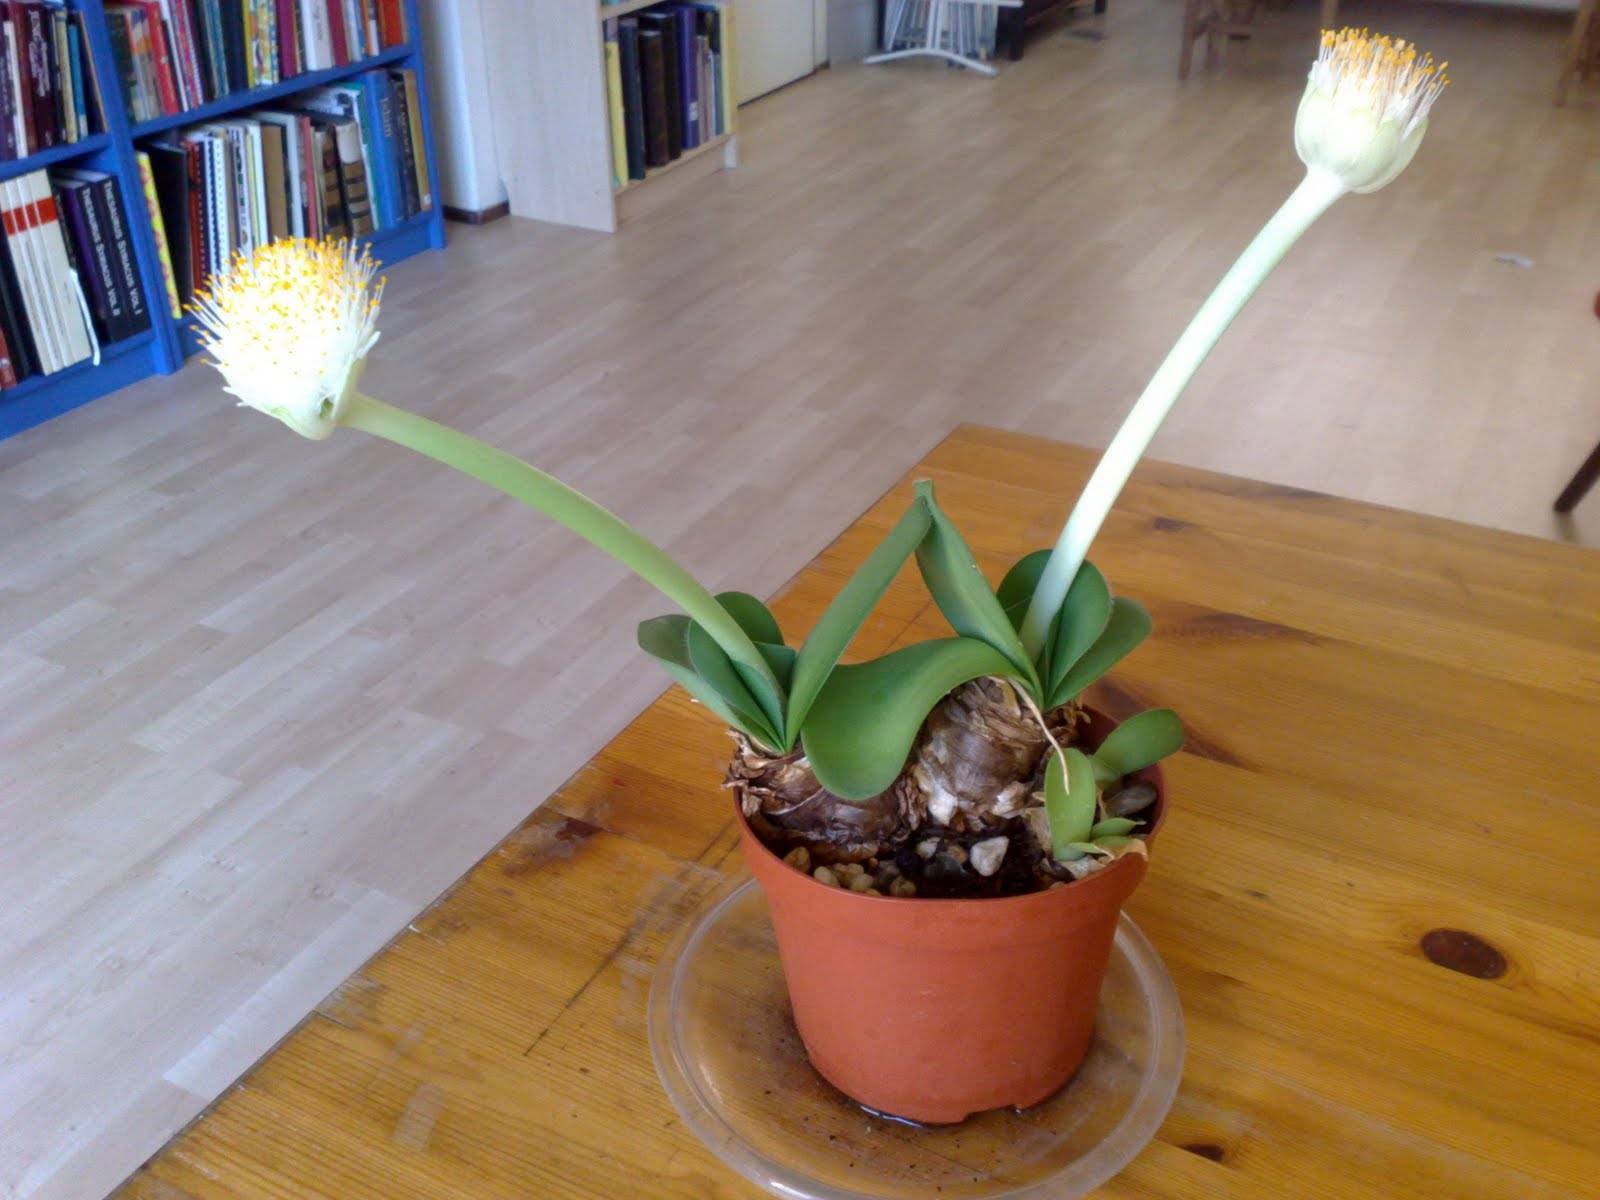 Гемантус уход в домашних условиях, фото, выращивание комнатного цветка